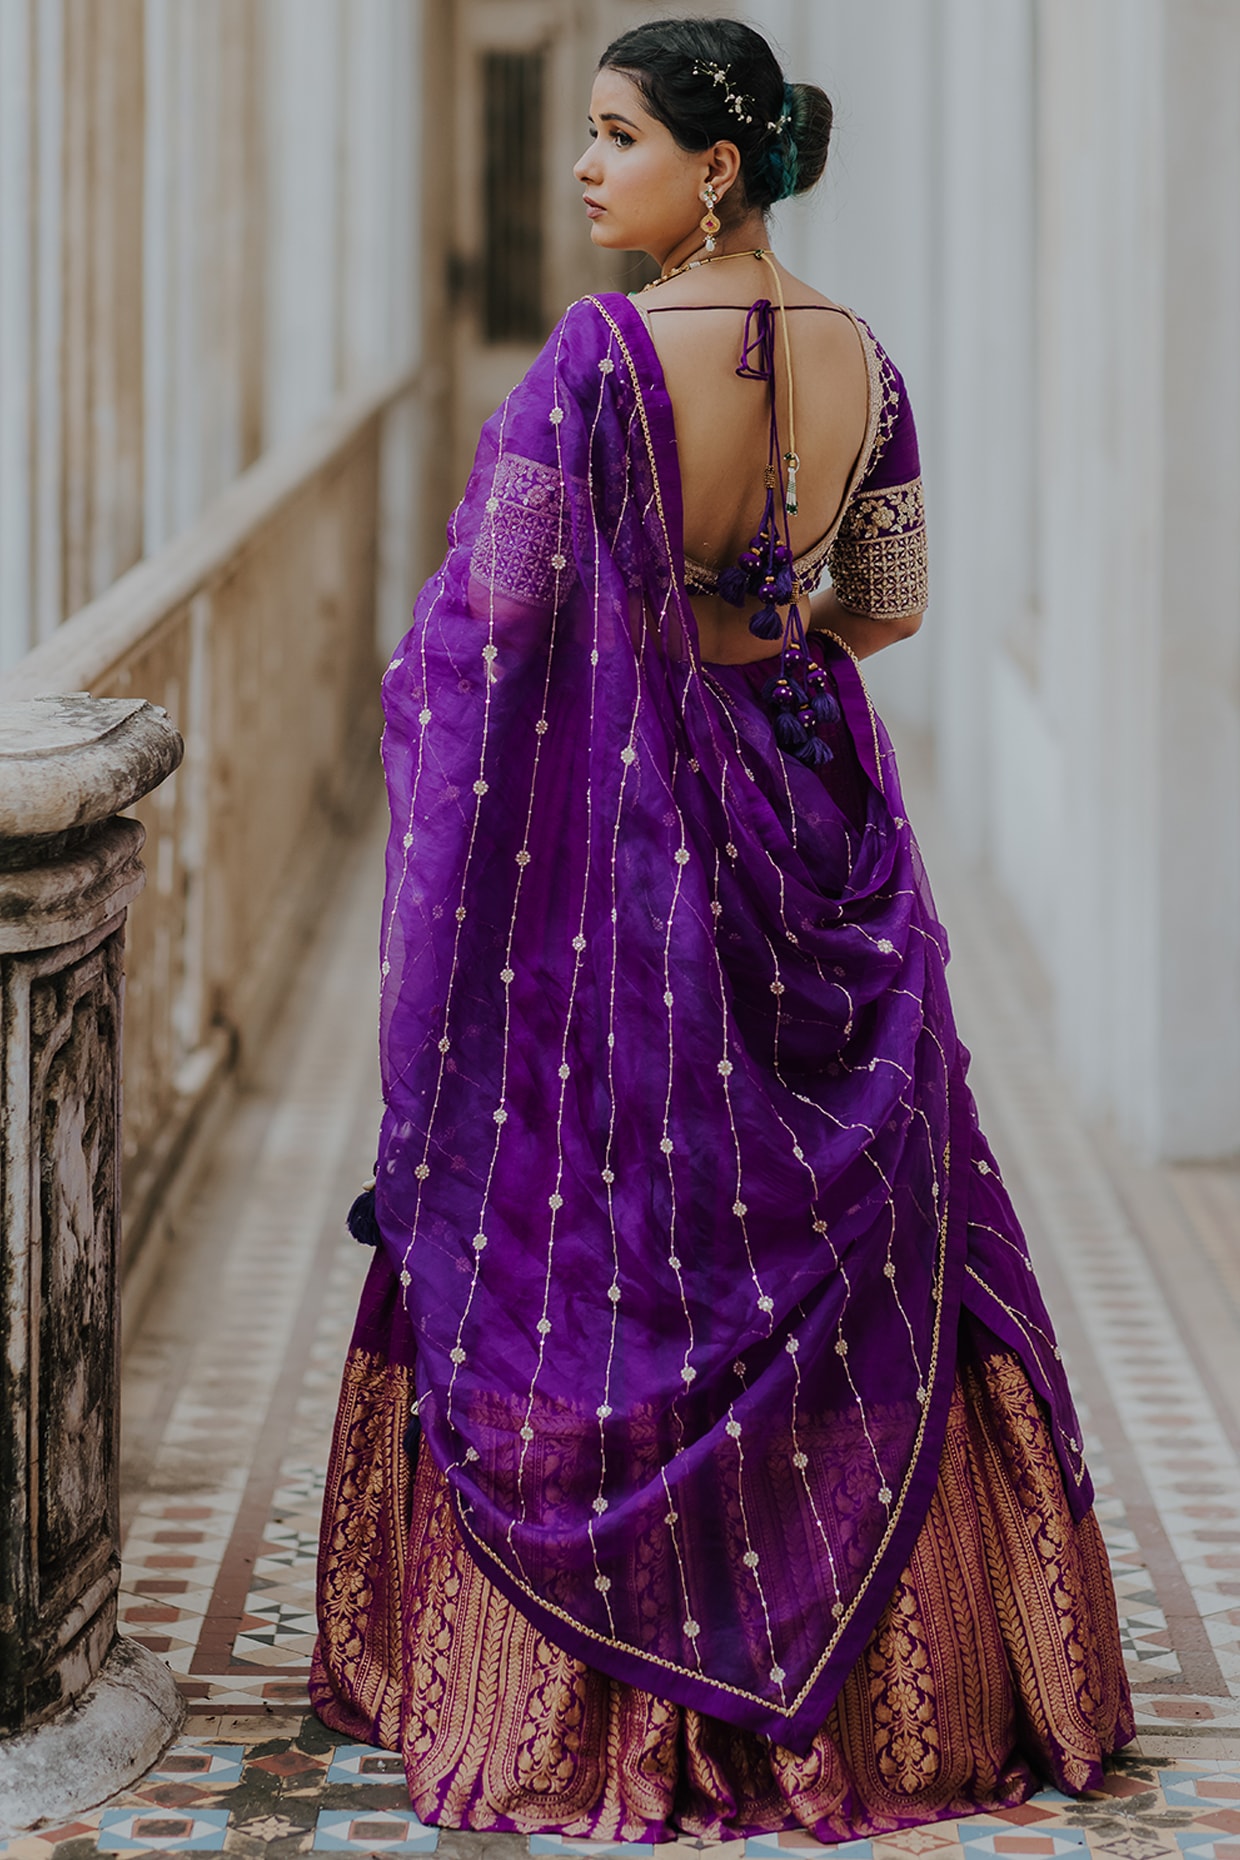 Banarasi Silk Lehenga Choli - Designer Banarasi Silk Lehenga Choli in  India, Wedding Banarasi Silk Lehenga Choli, Banarasi Silk Lehenga Choli For  Wedding